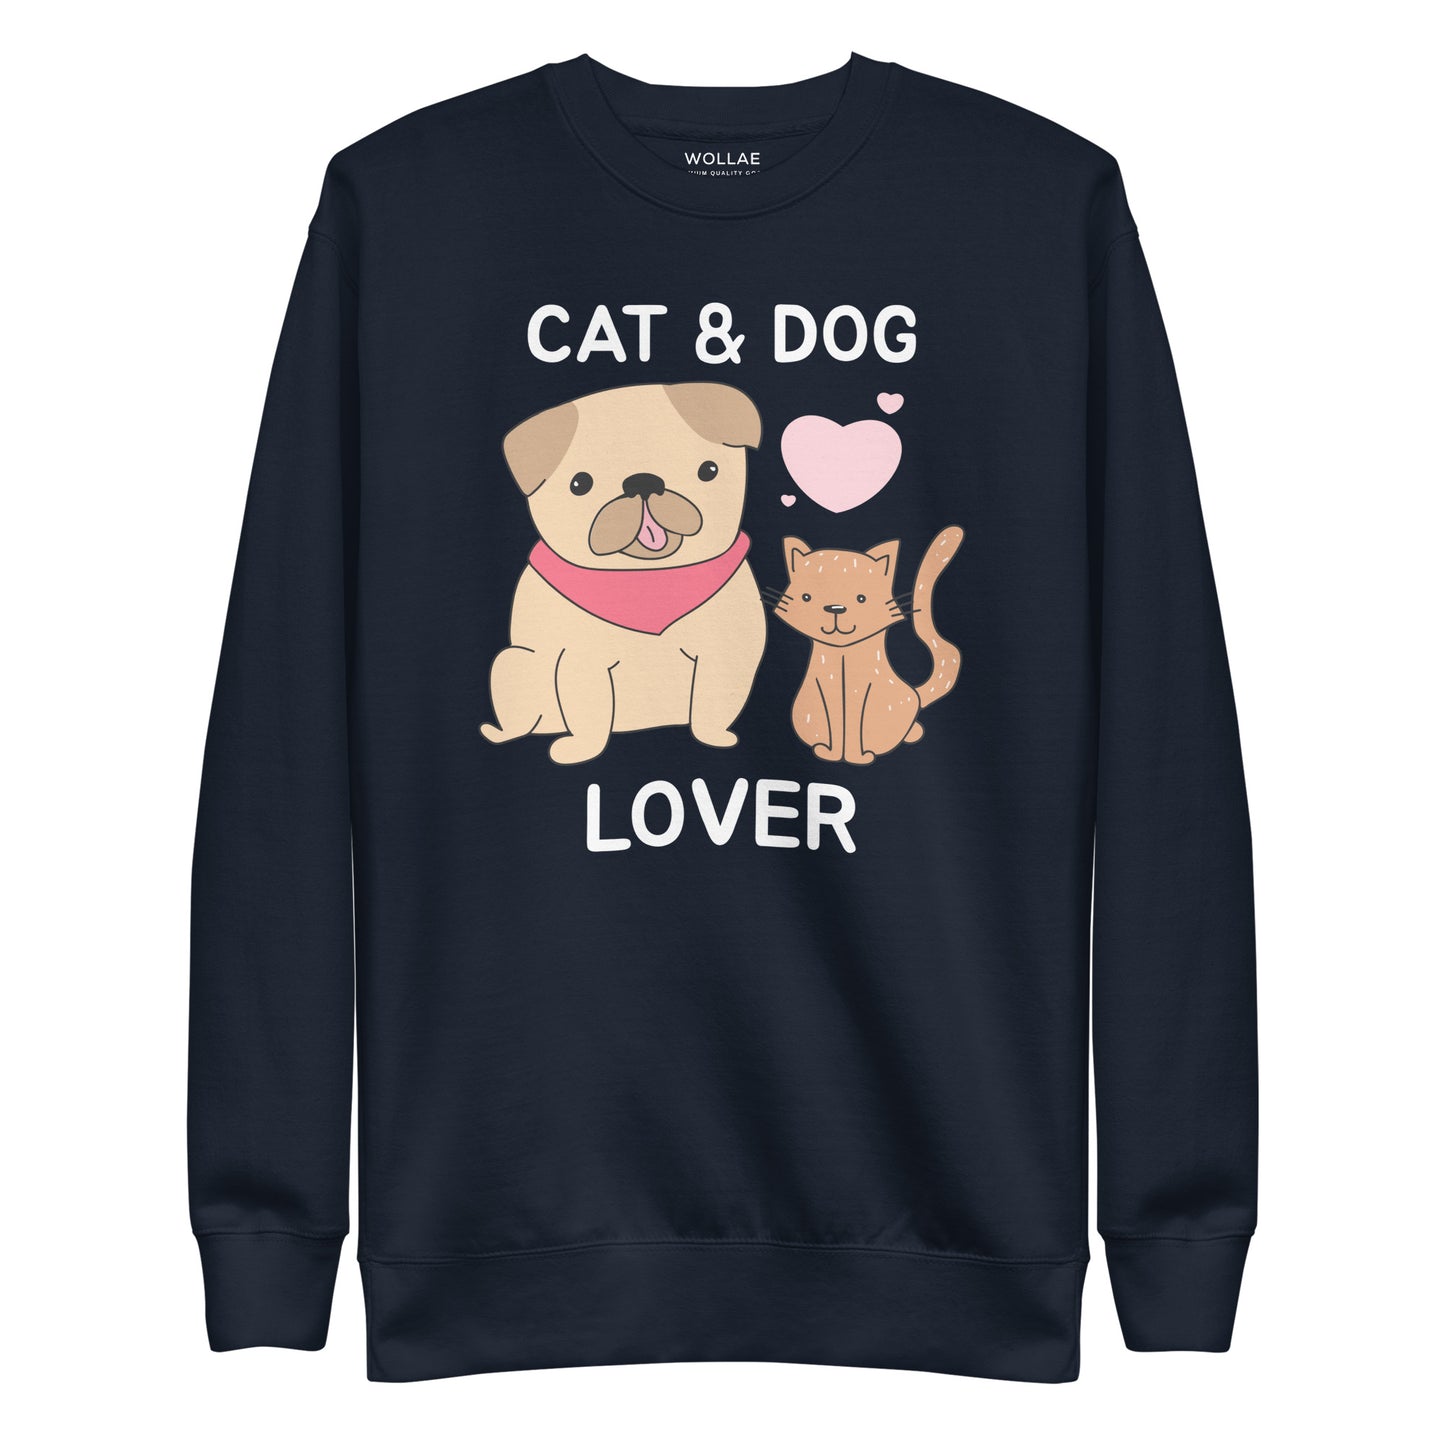 Cat & Dog Lover Sweatshirt